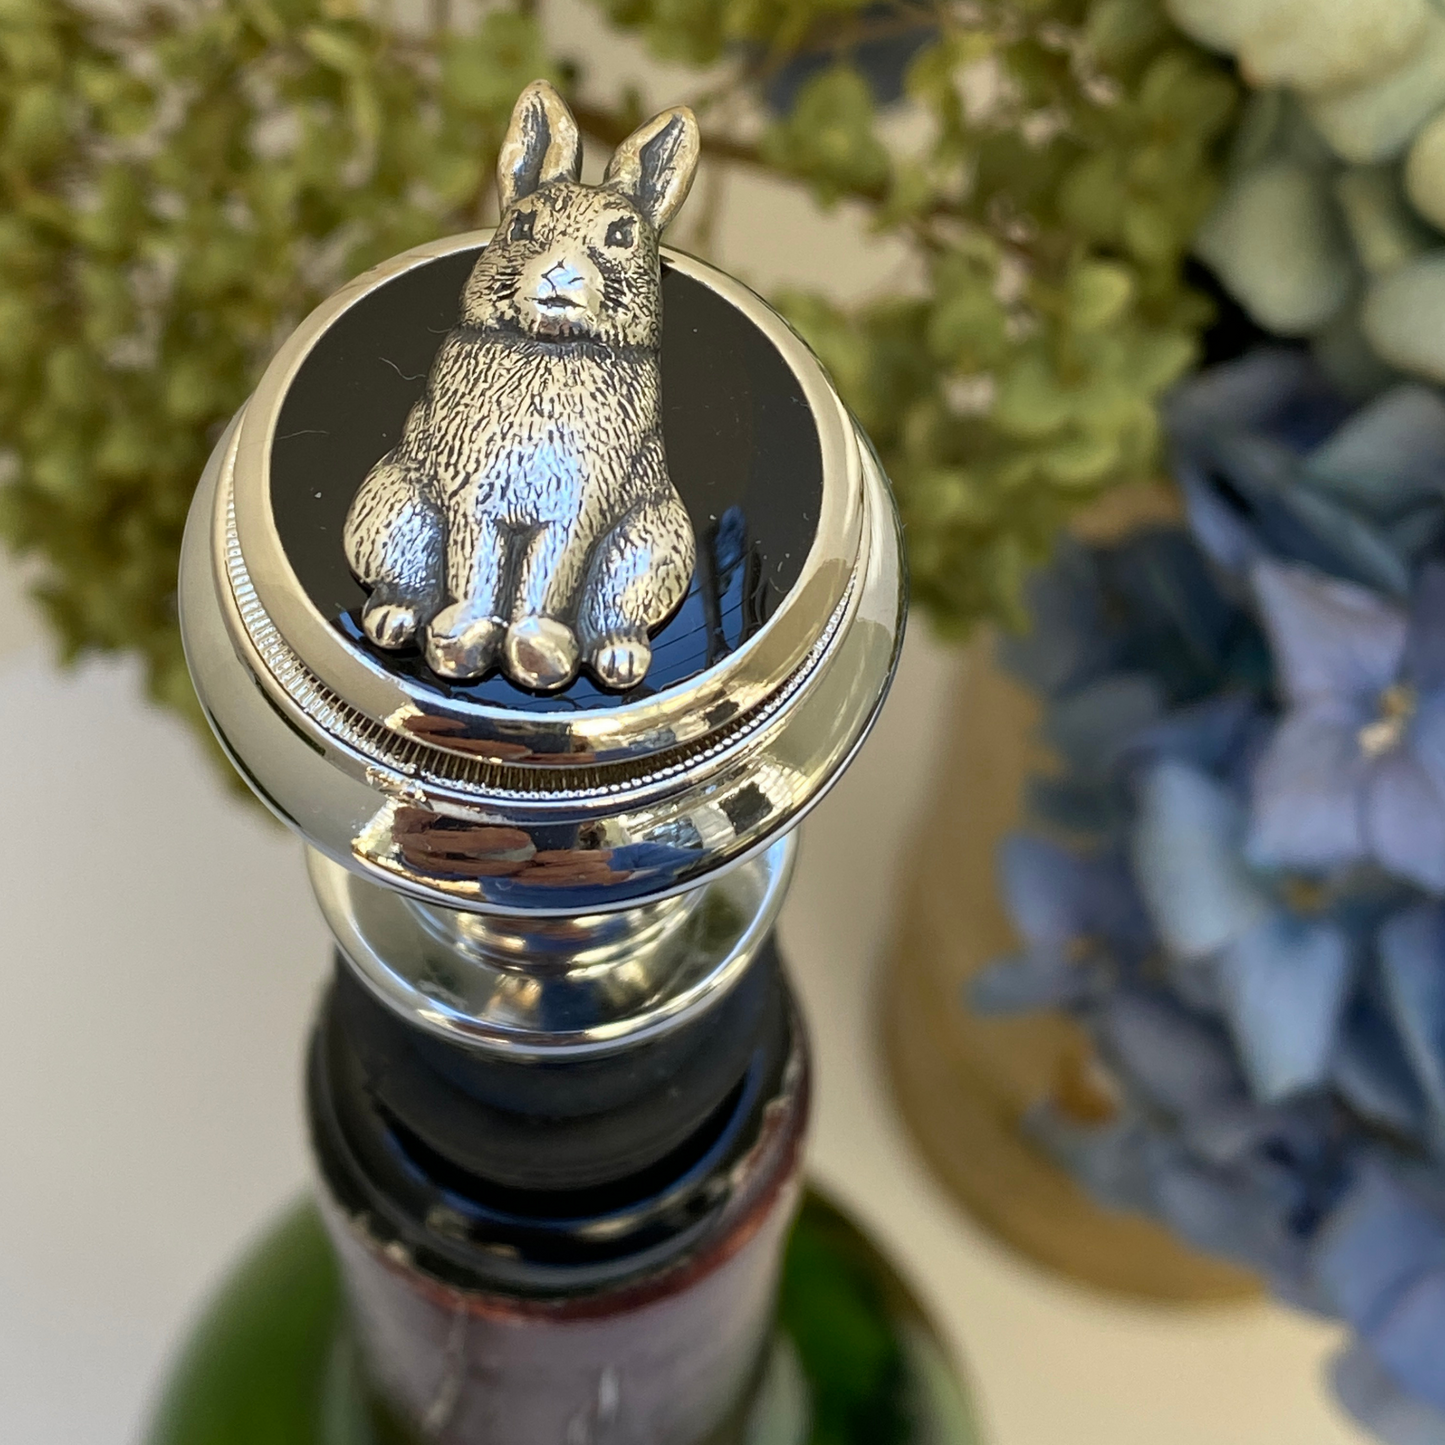 Bunny Gift, Bunny Bottle Stopper, Rabbit Bottle Stopper, Black Enamel Setting with Silver Bunny, Gift for Bunny Lovers